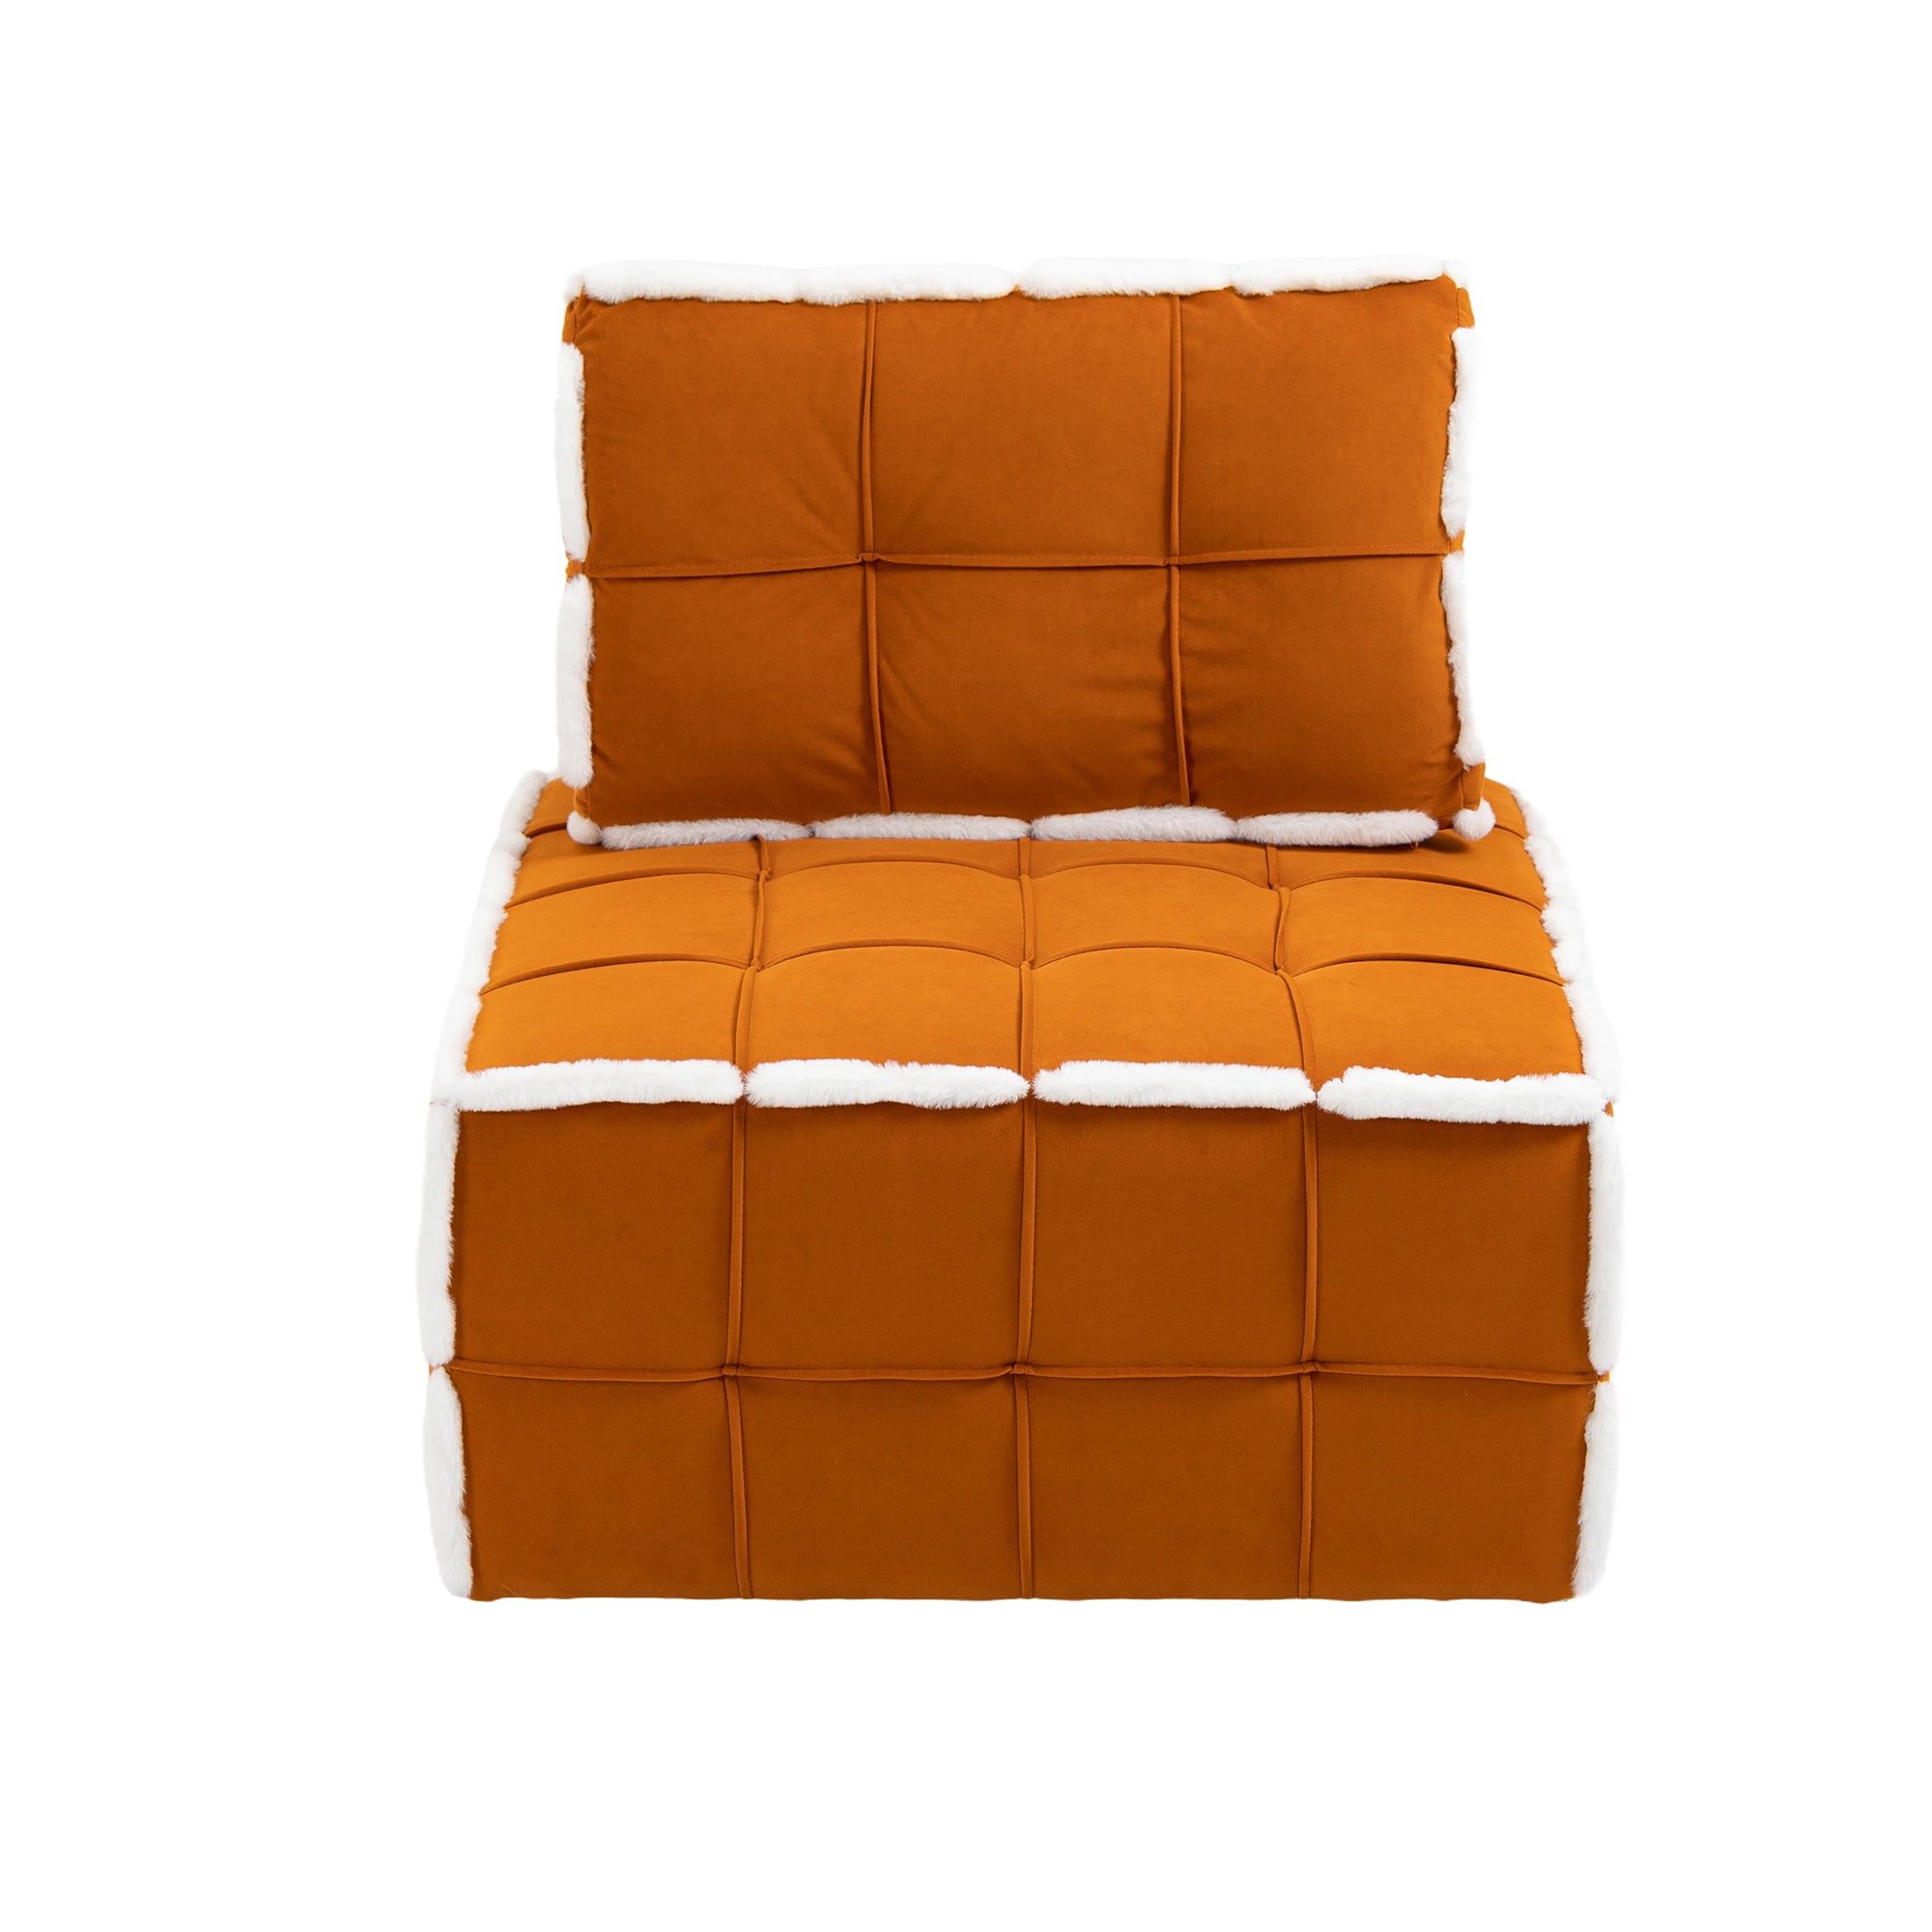 COOLMORE Upholstered Deep Seat Armless Accent Single orange-velvet